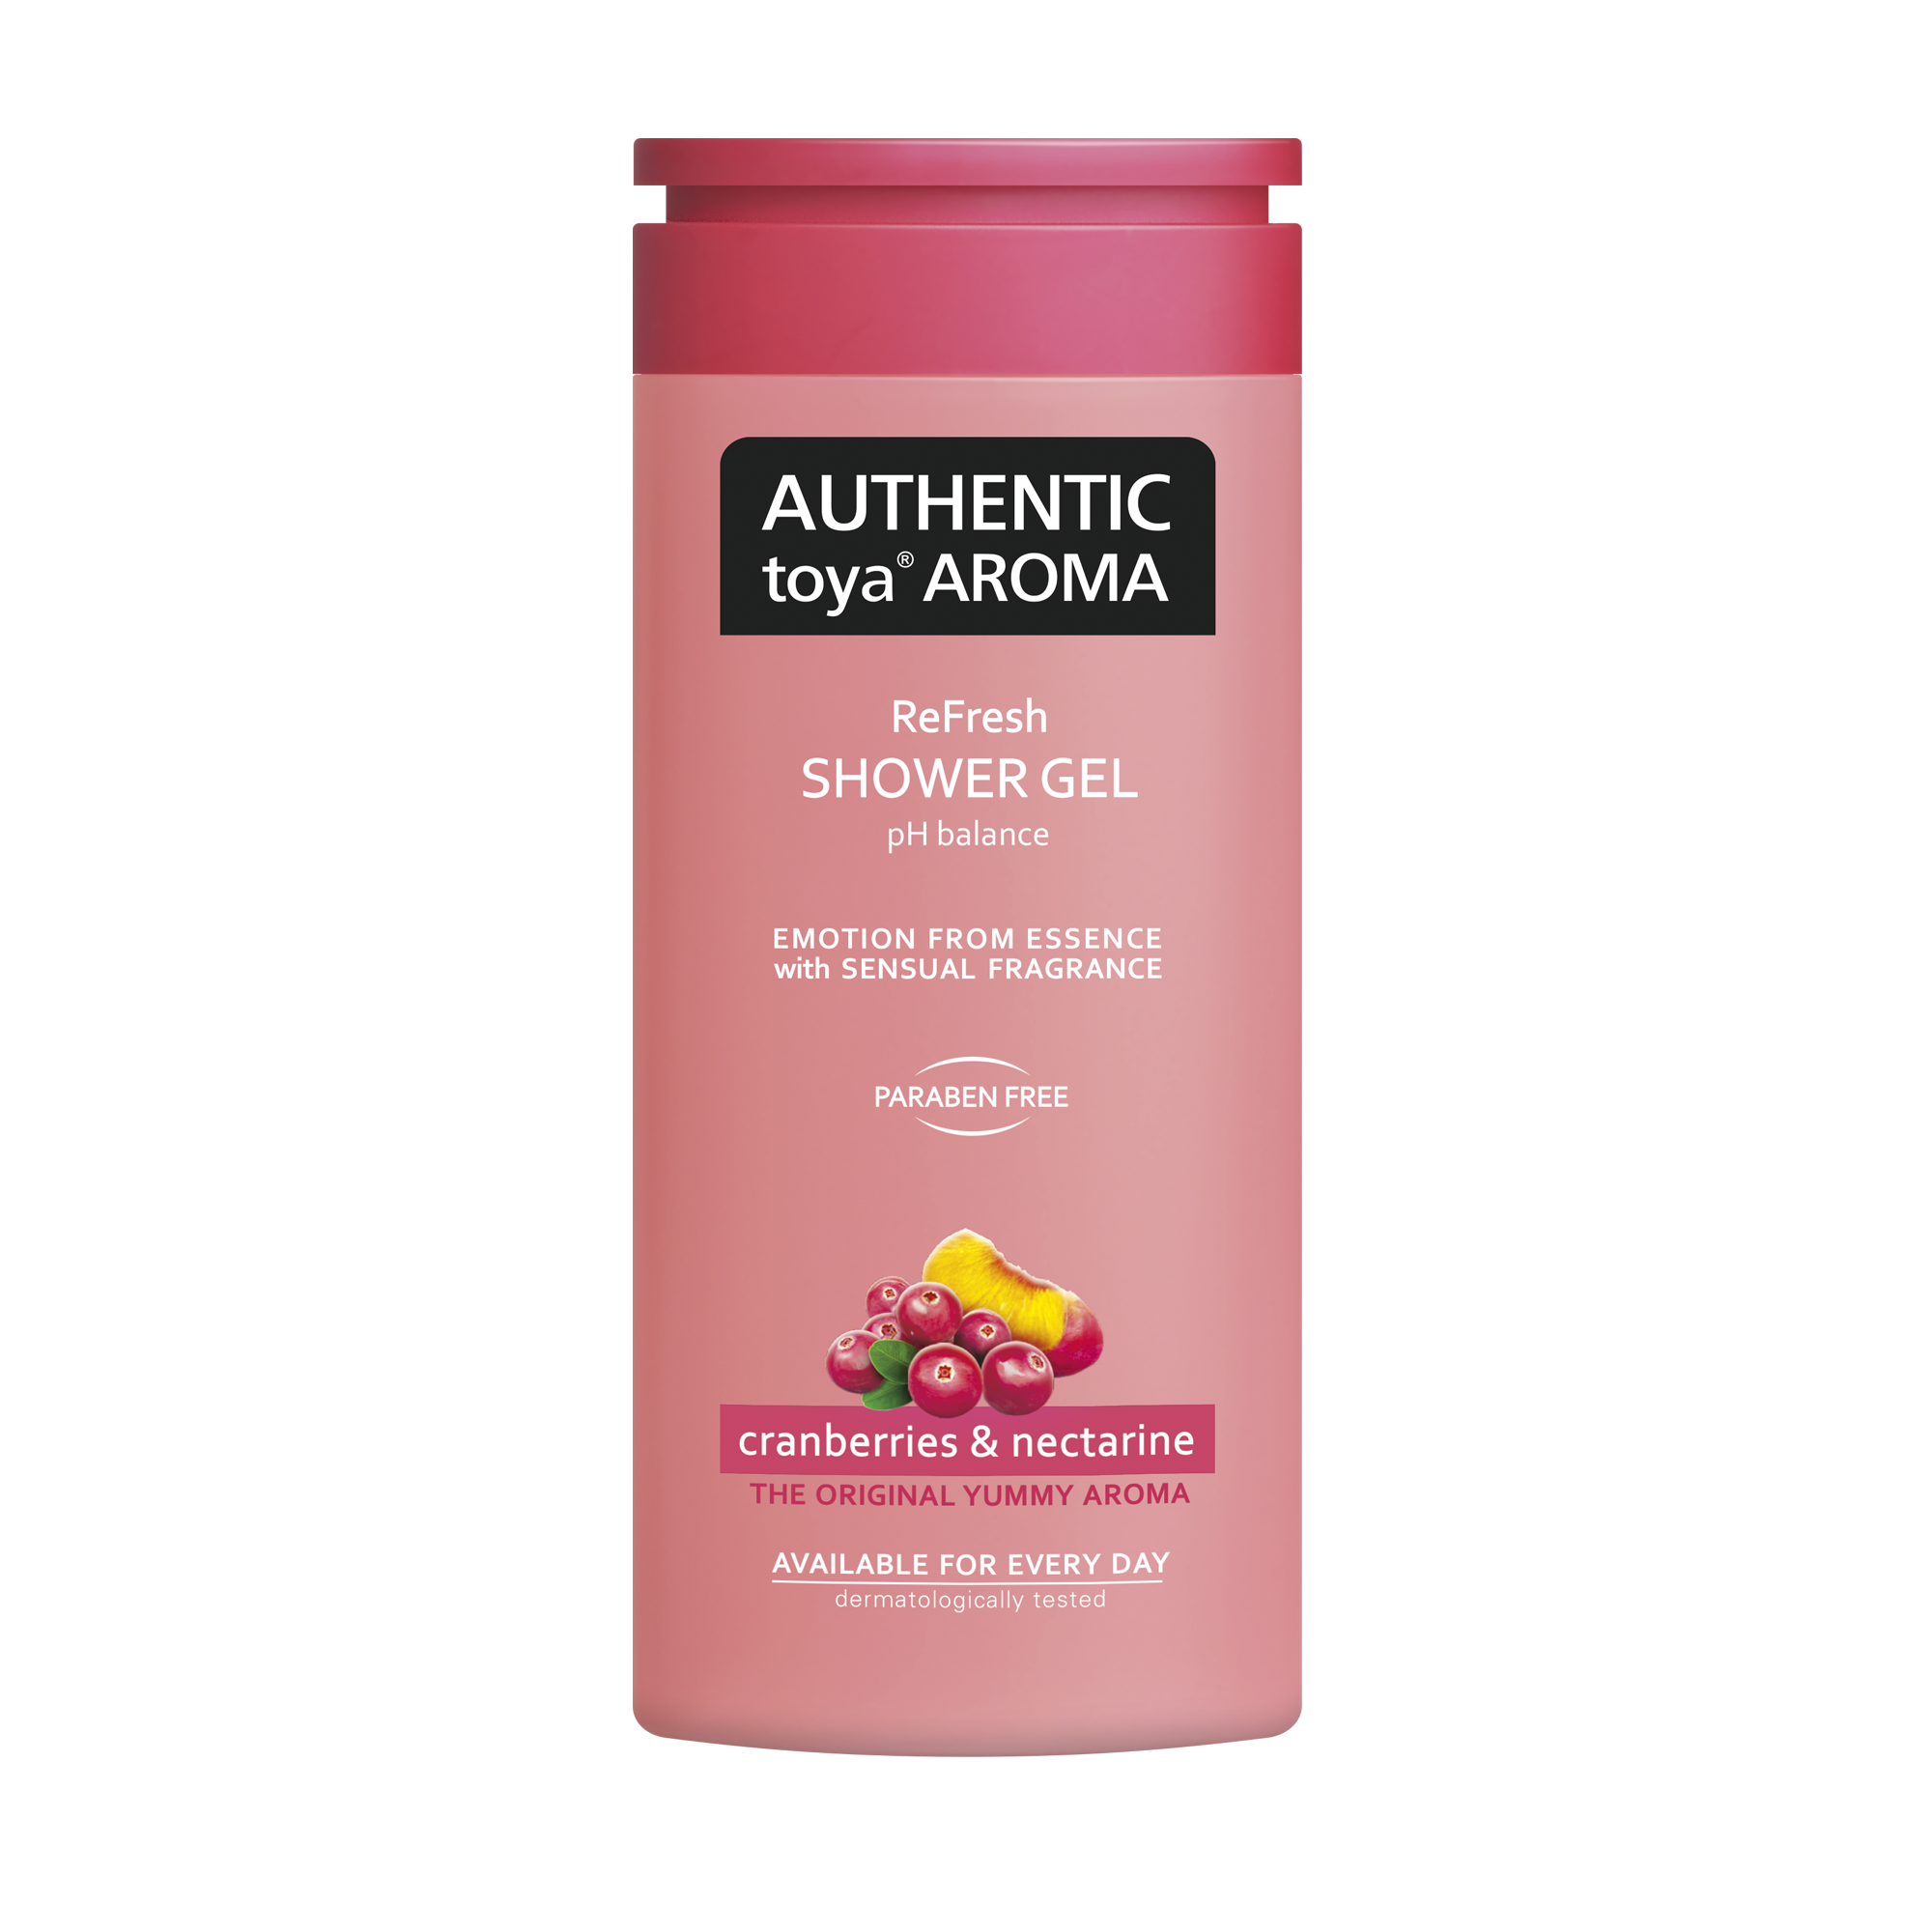 Authentic-toya-aroma-cranberries-nectarine_1